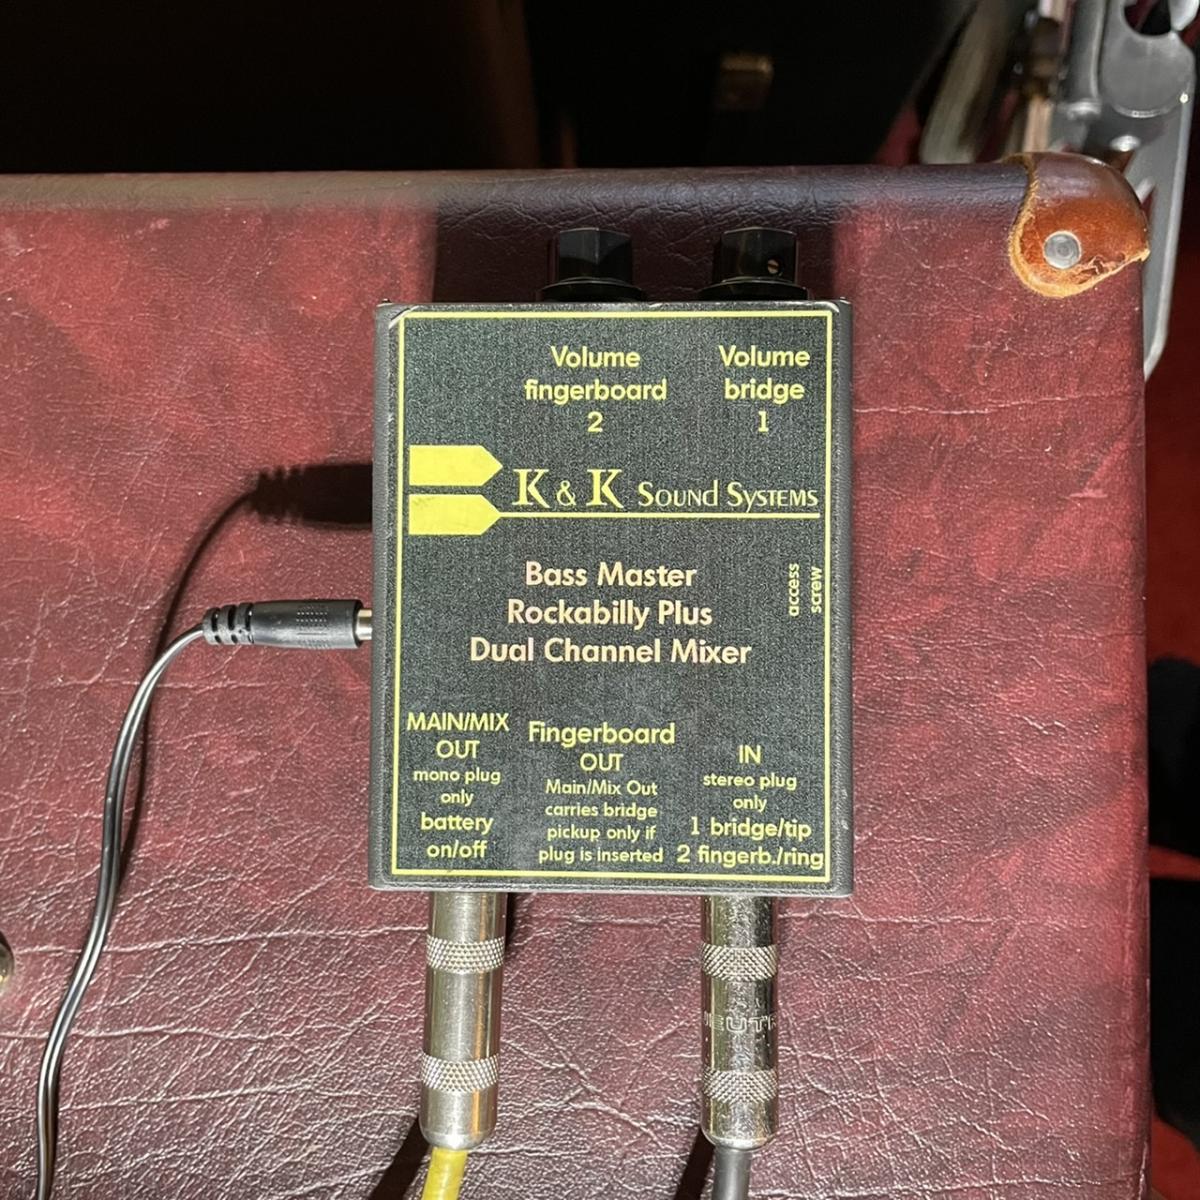 Modded K&K preamp on top of amplifier